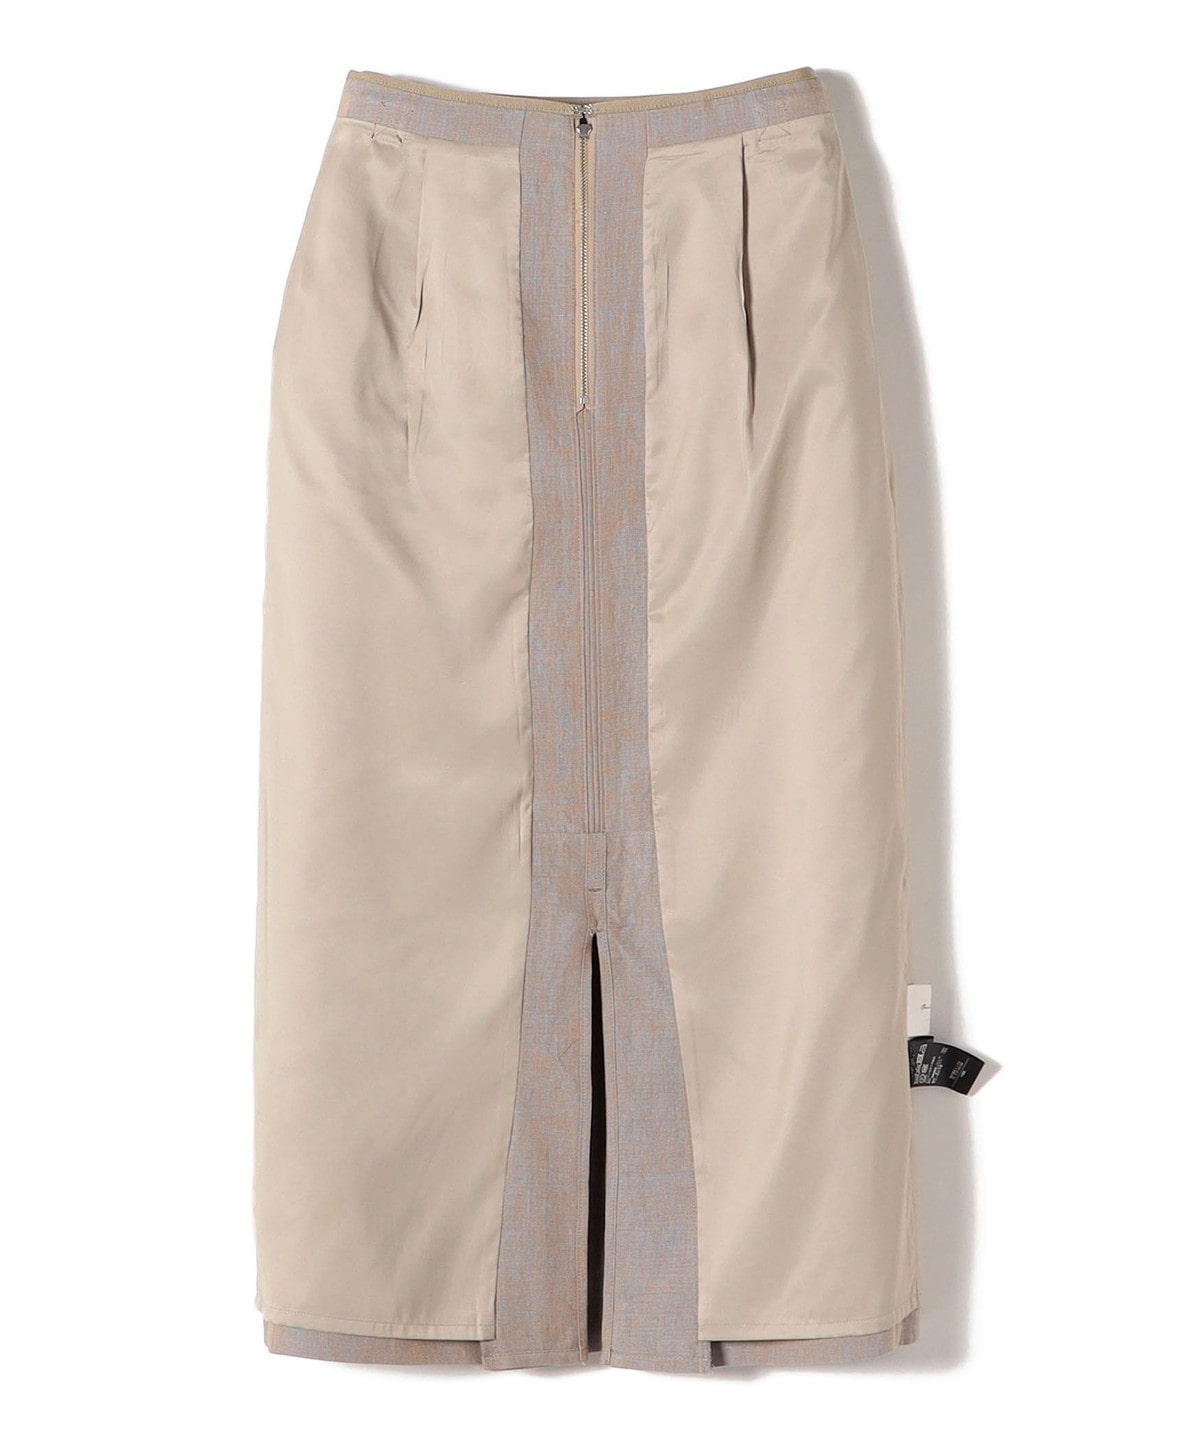 0 x ones：ベネフィットヘンプアイラインスカート: スカート SHIPS